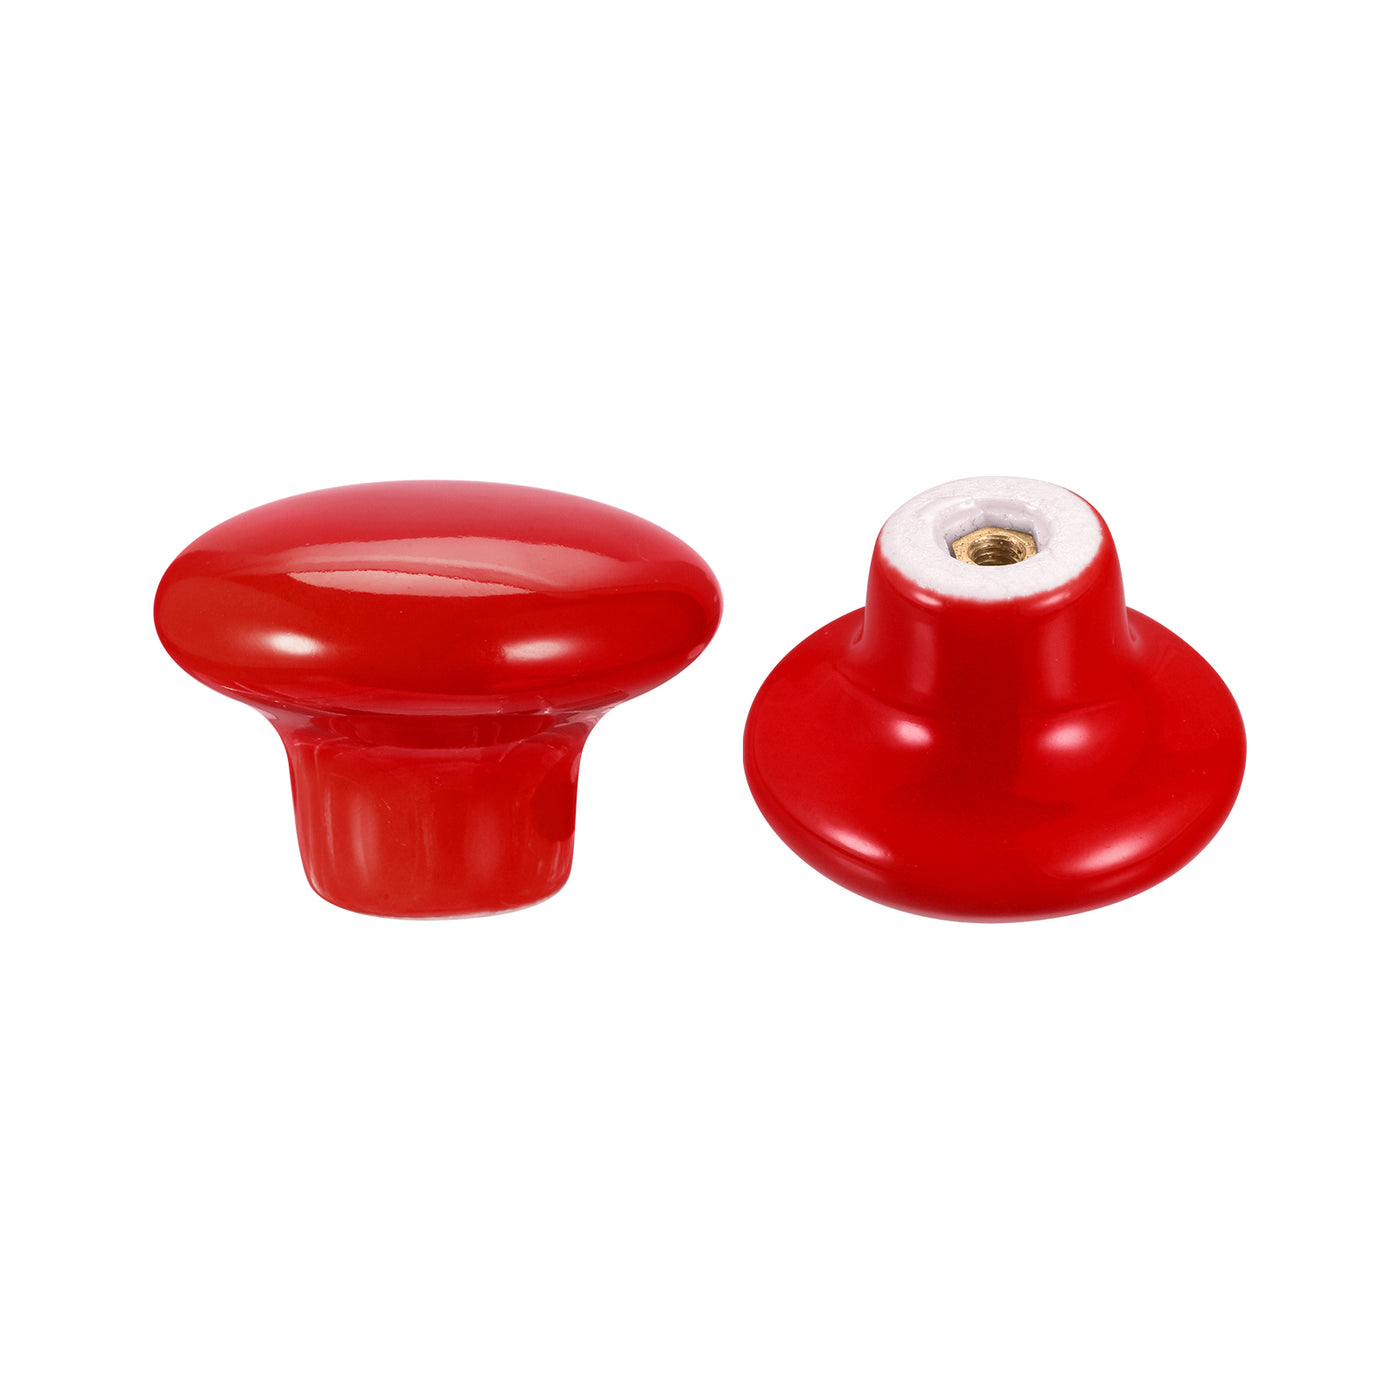 uxcell Uxcell Ceramic Drawer Knobs 6pcs Mushroom Shape Pulls 1.1"x1.5" for Dresser(Red)